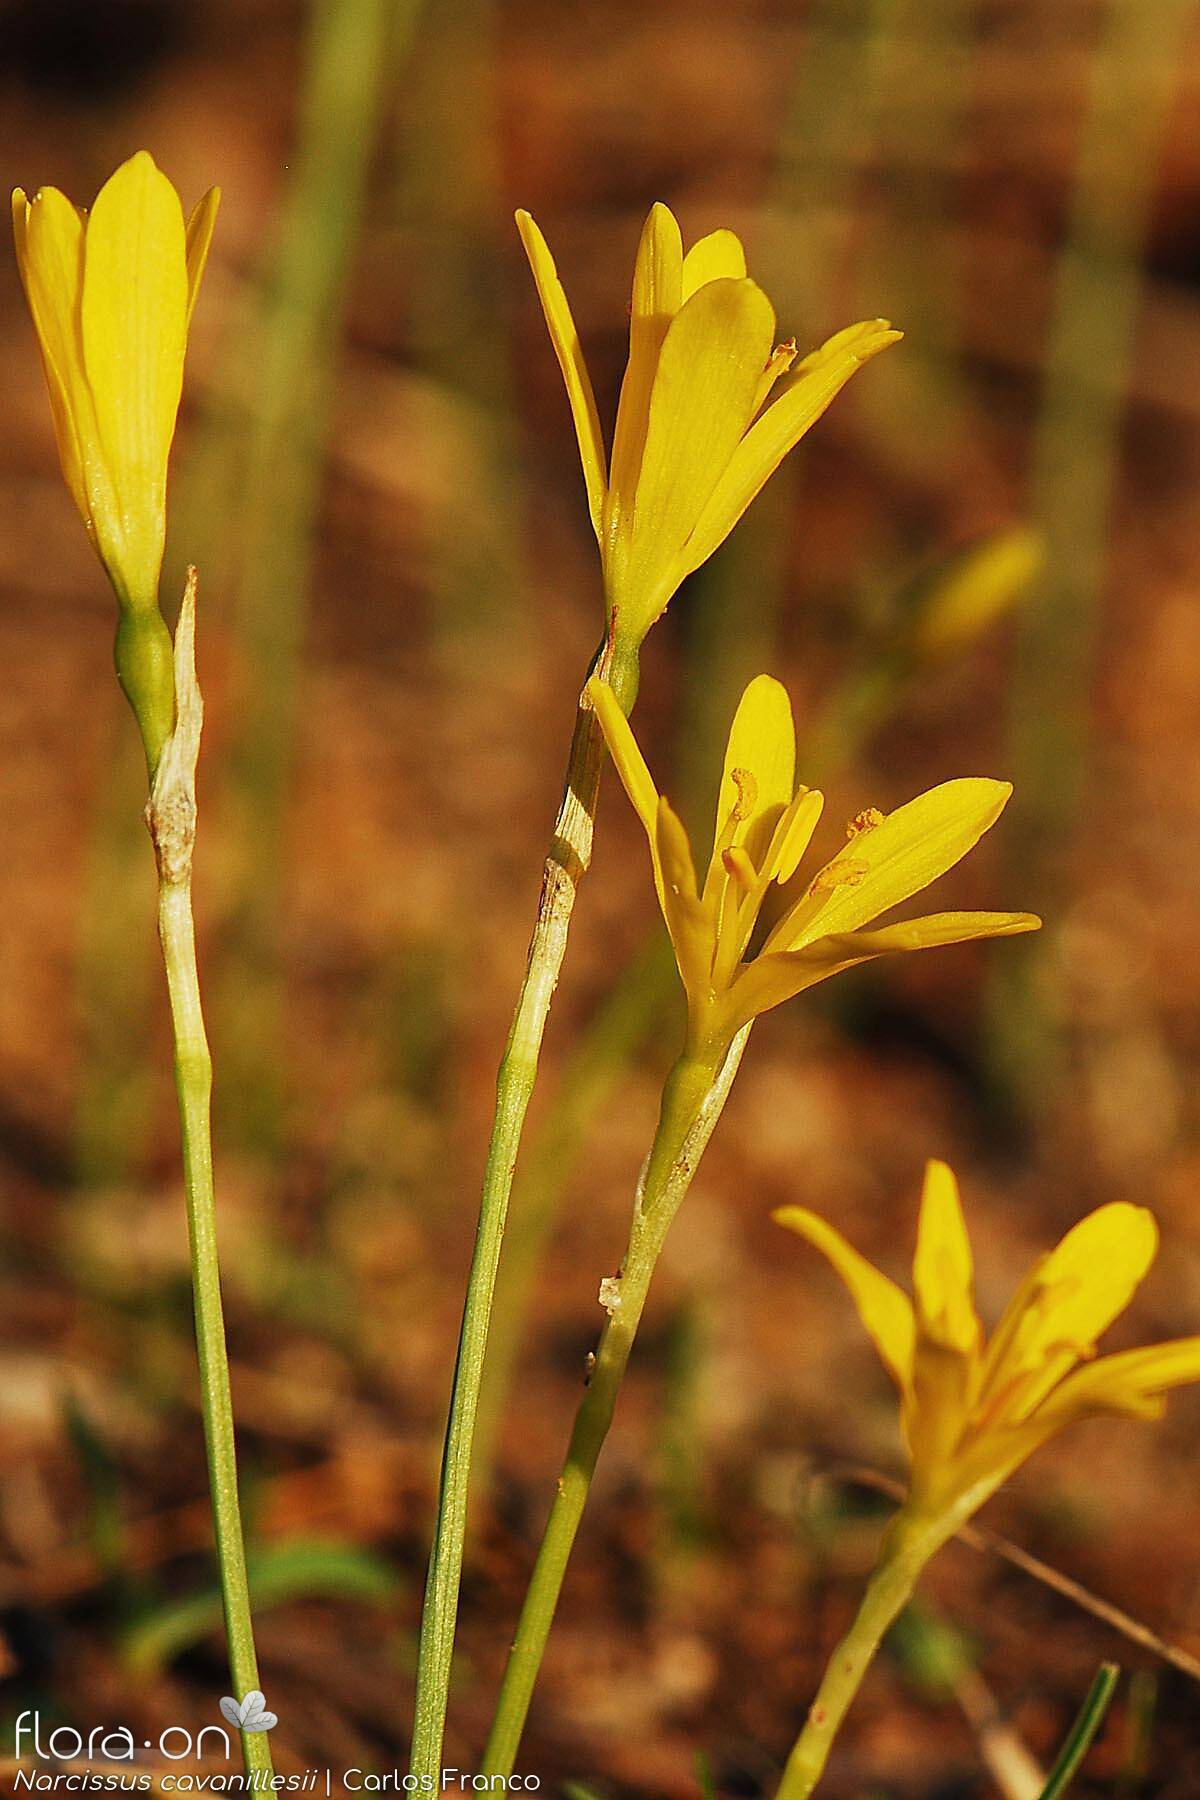 Narcissus cavanillesii - Flor (geral) | Carlos Franco; CC BY-NC 4.0